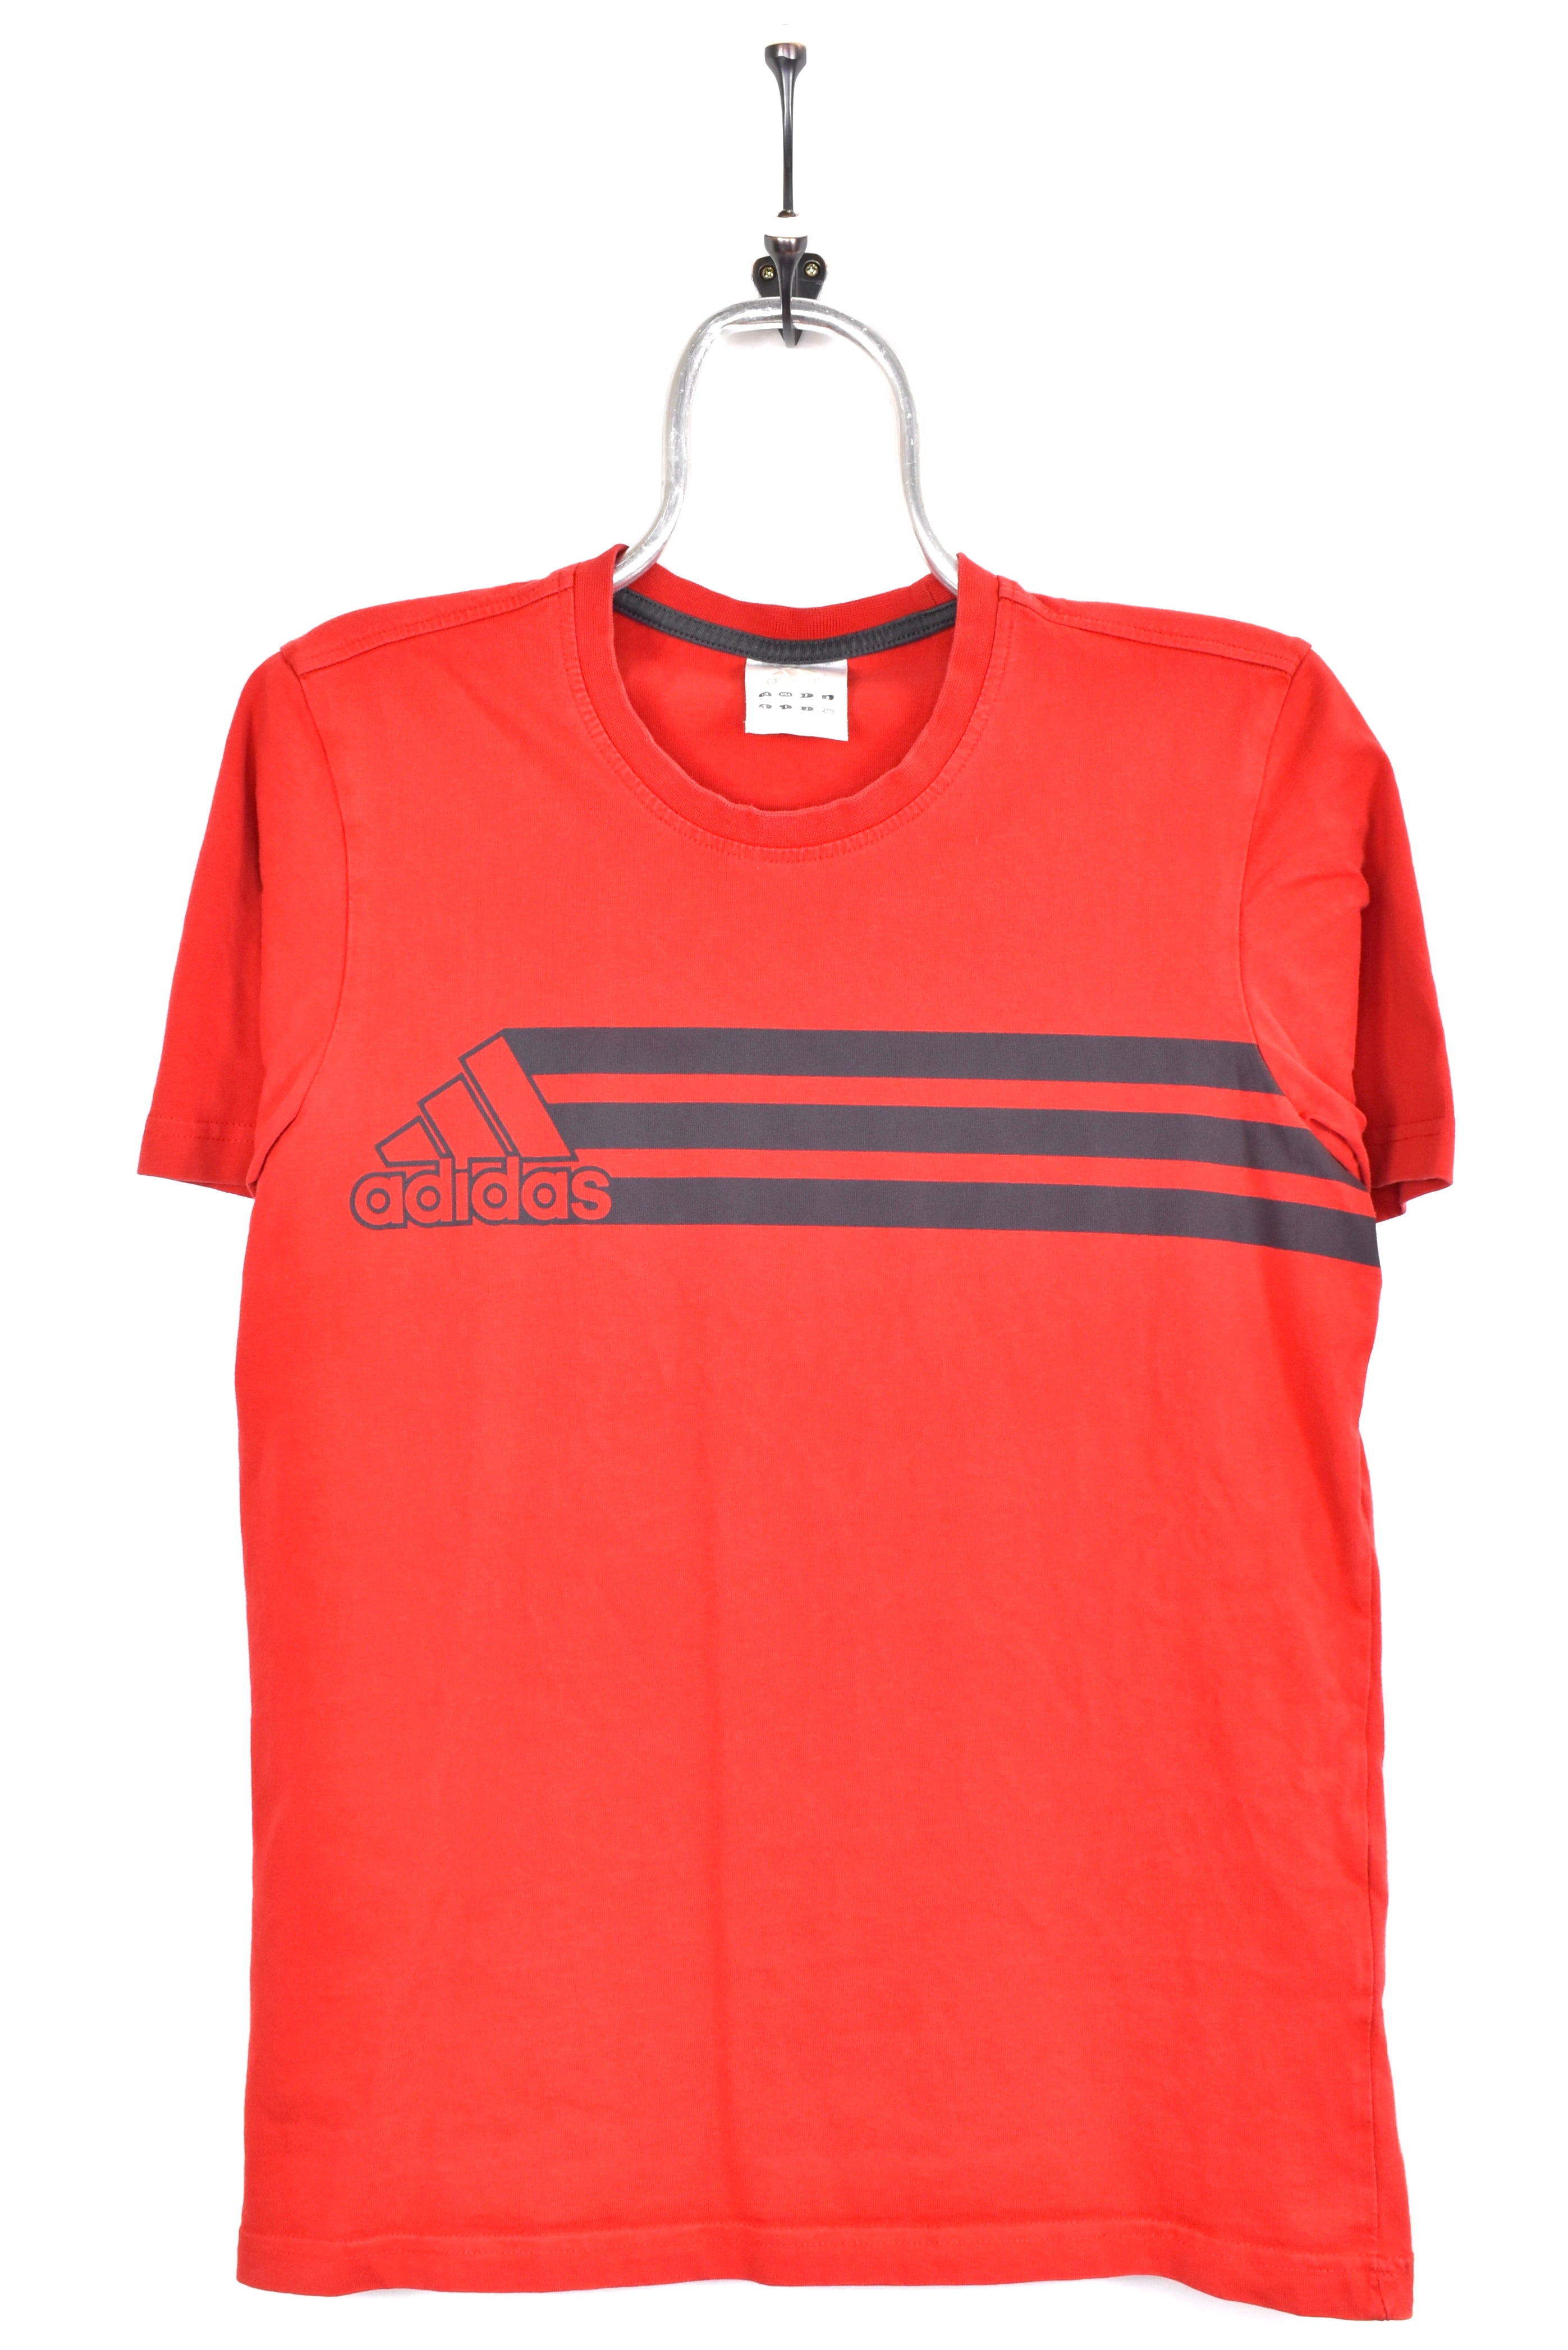 Modern Adidas shirt, red graphic tee - AU S ADIDAS